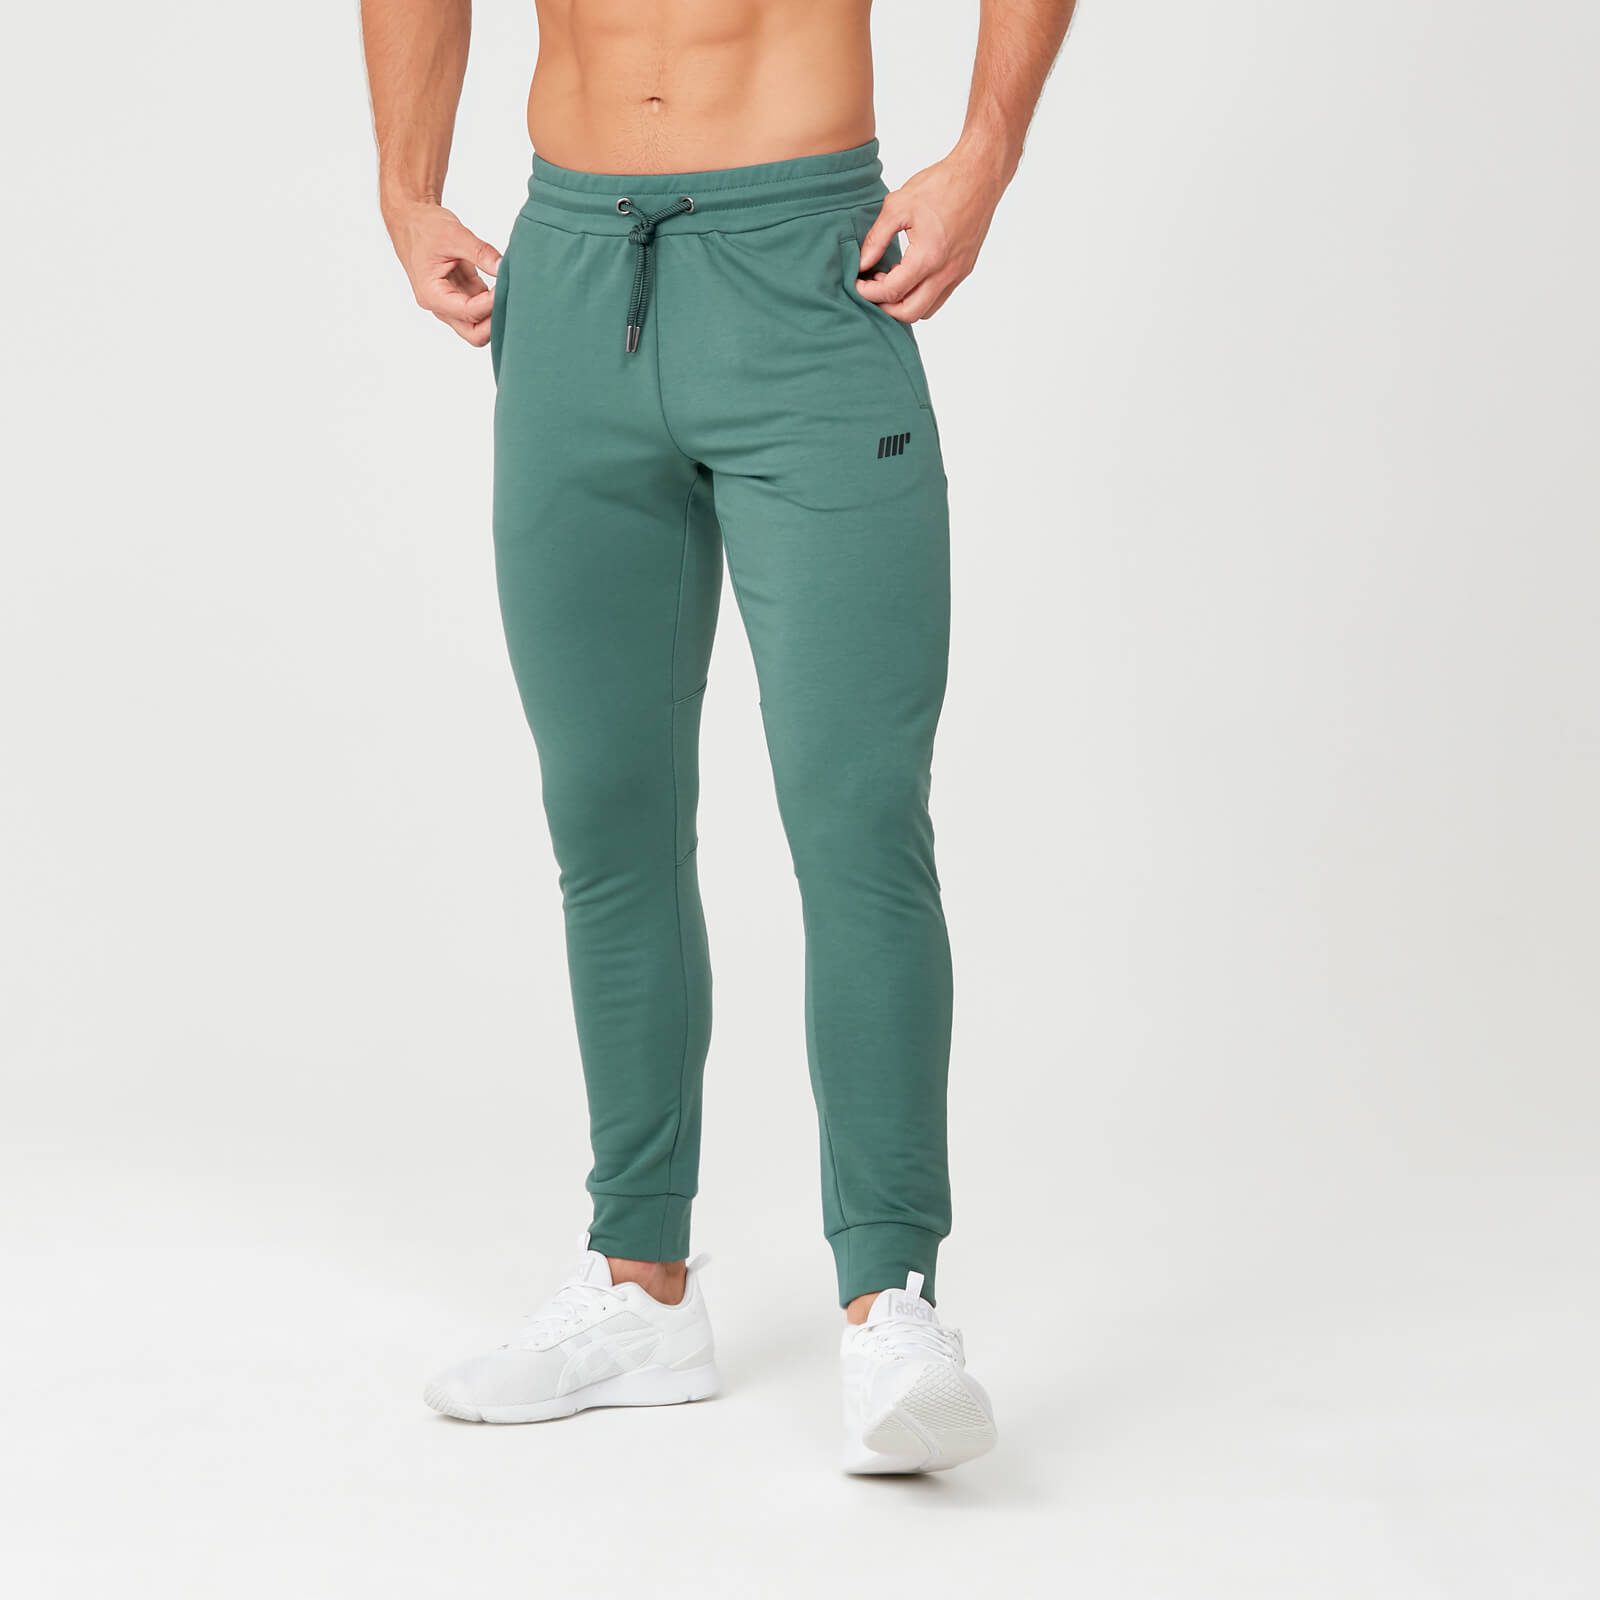 Form joggers hlače - Zelene - XS